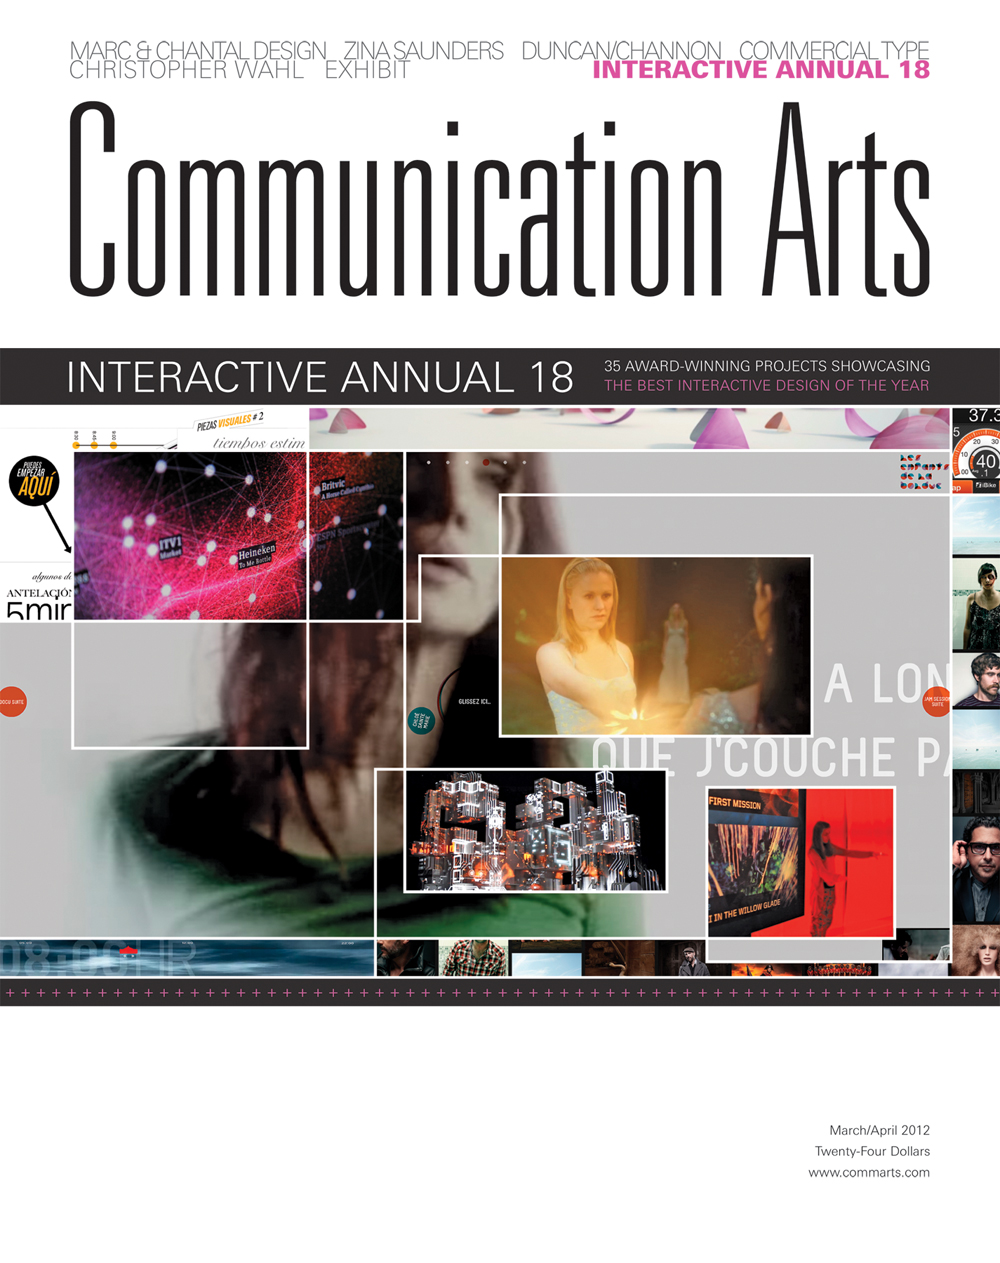 Communication Arts magazine: Cover, March/April 2012